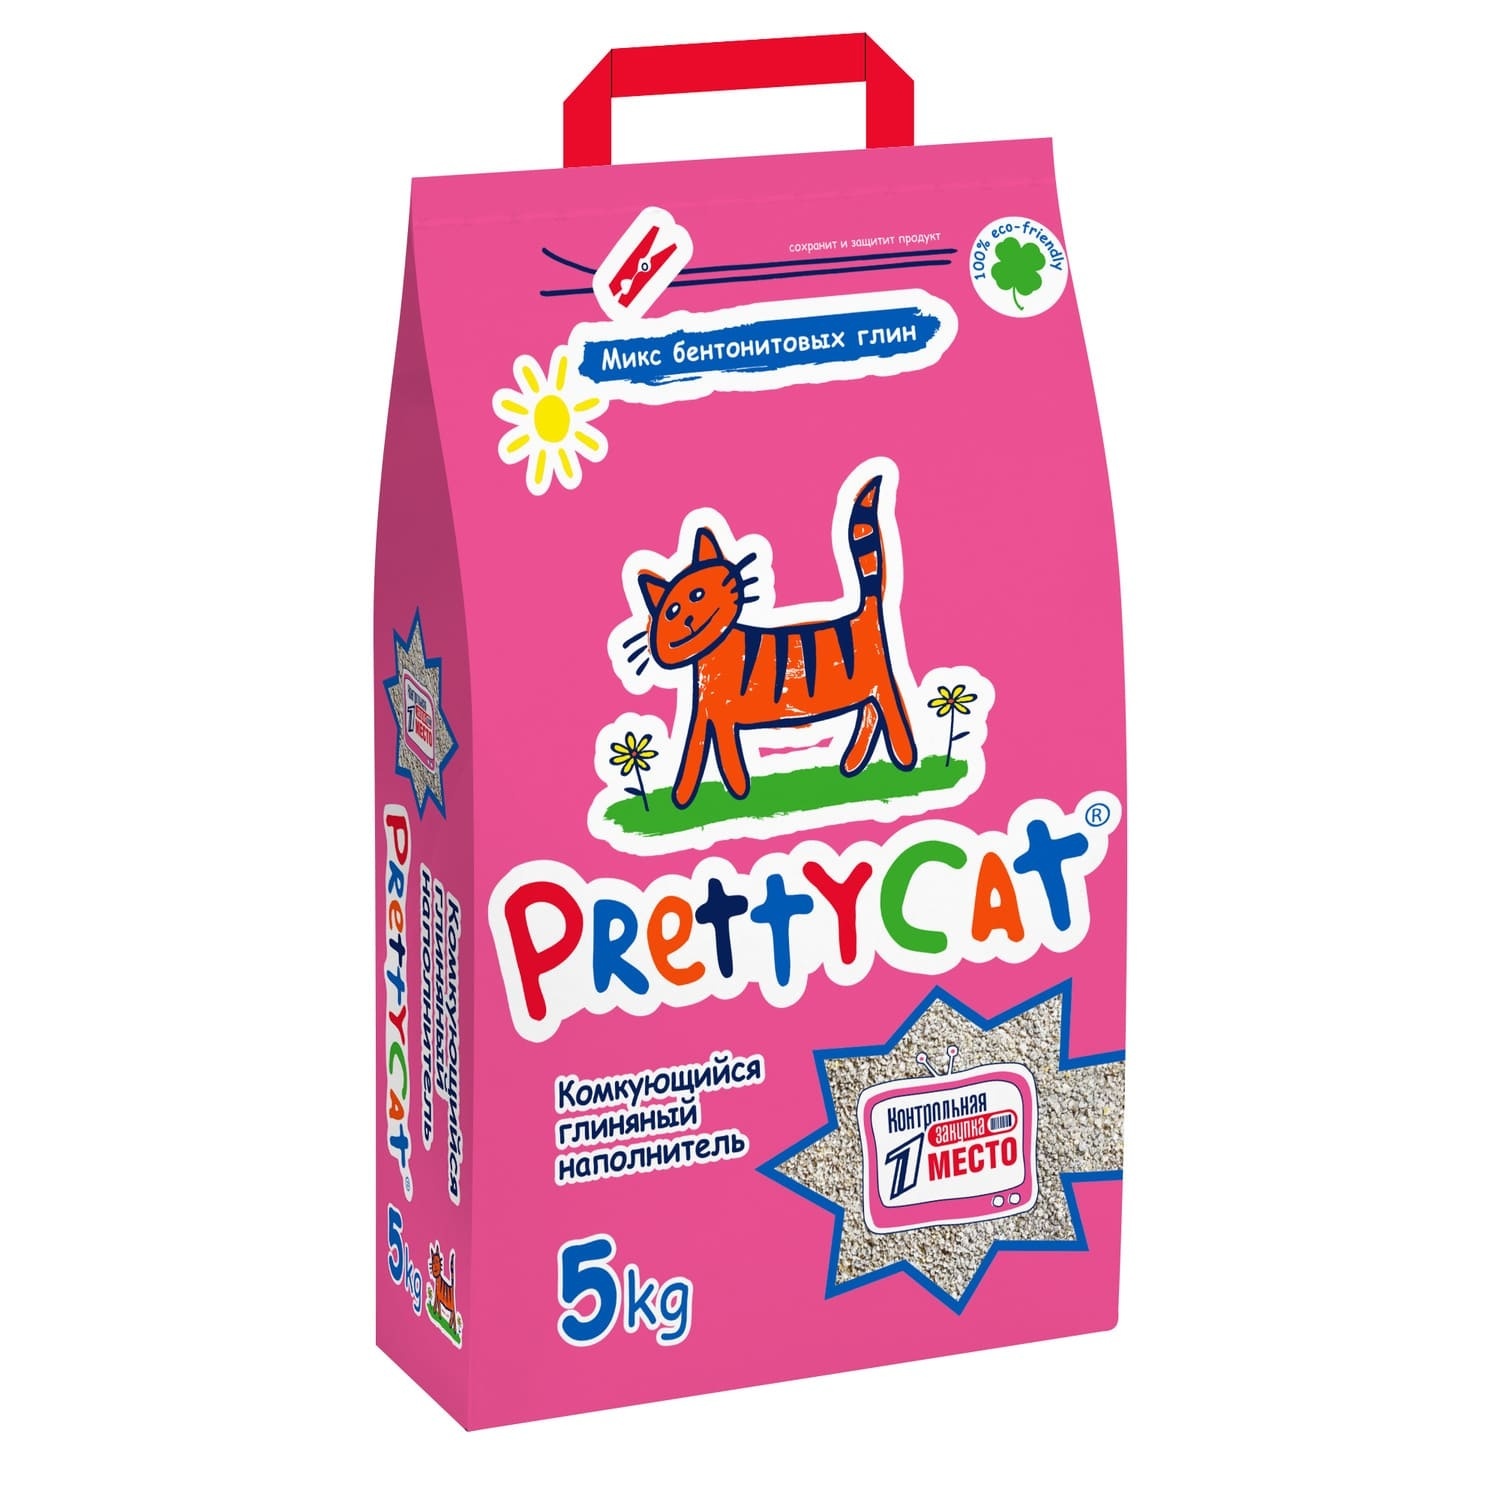 PrettyCat PrettyCat комкующийся наполнитель (20 кг) prettycat prettycat комкующийся наполнитель 20 кг